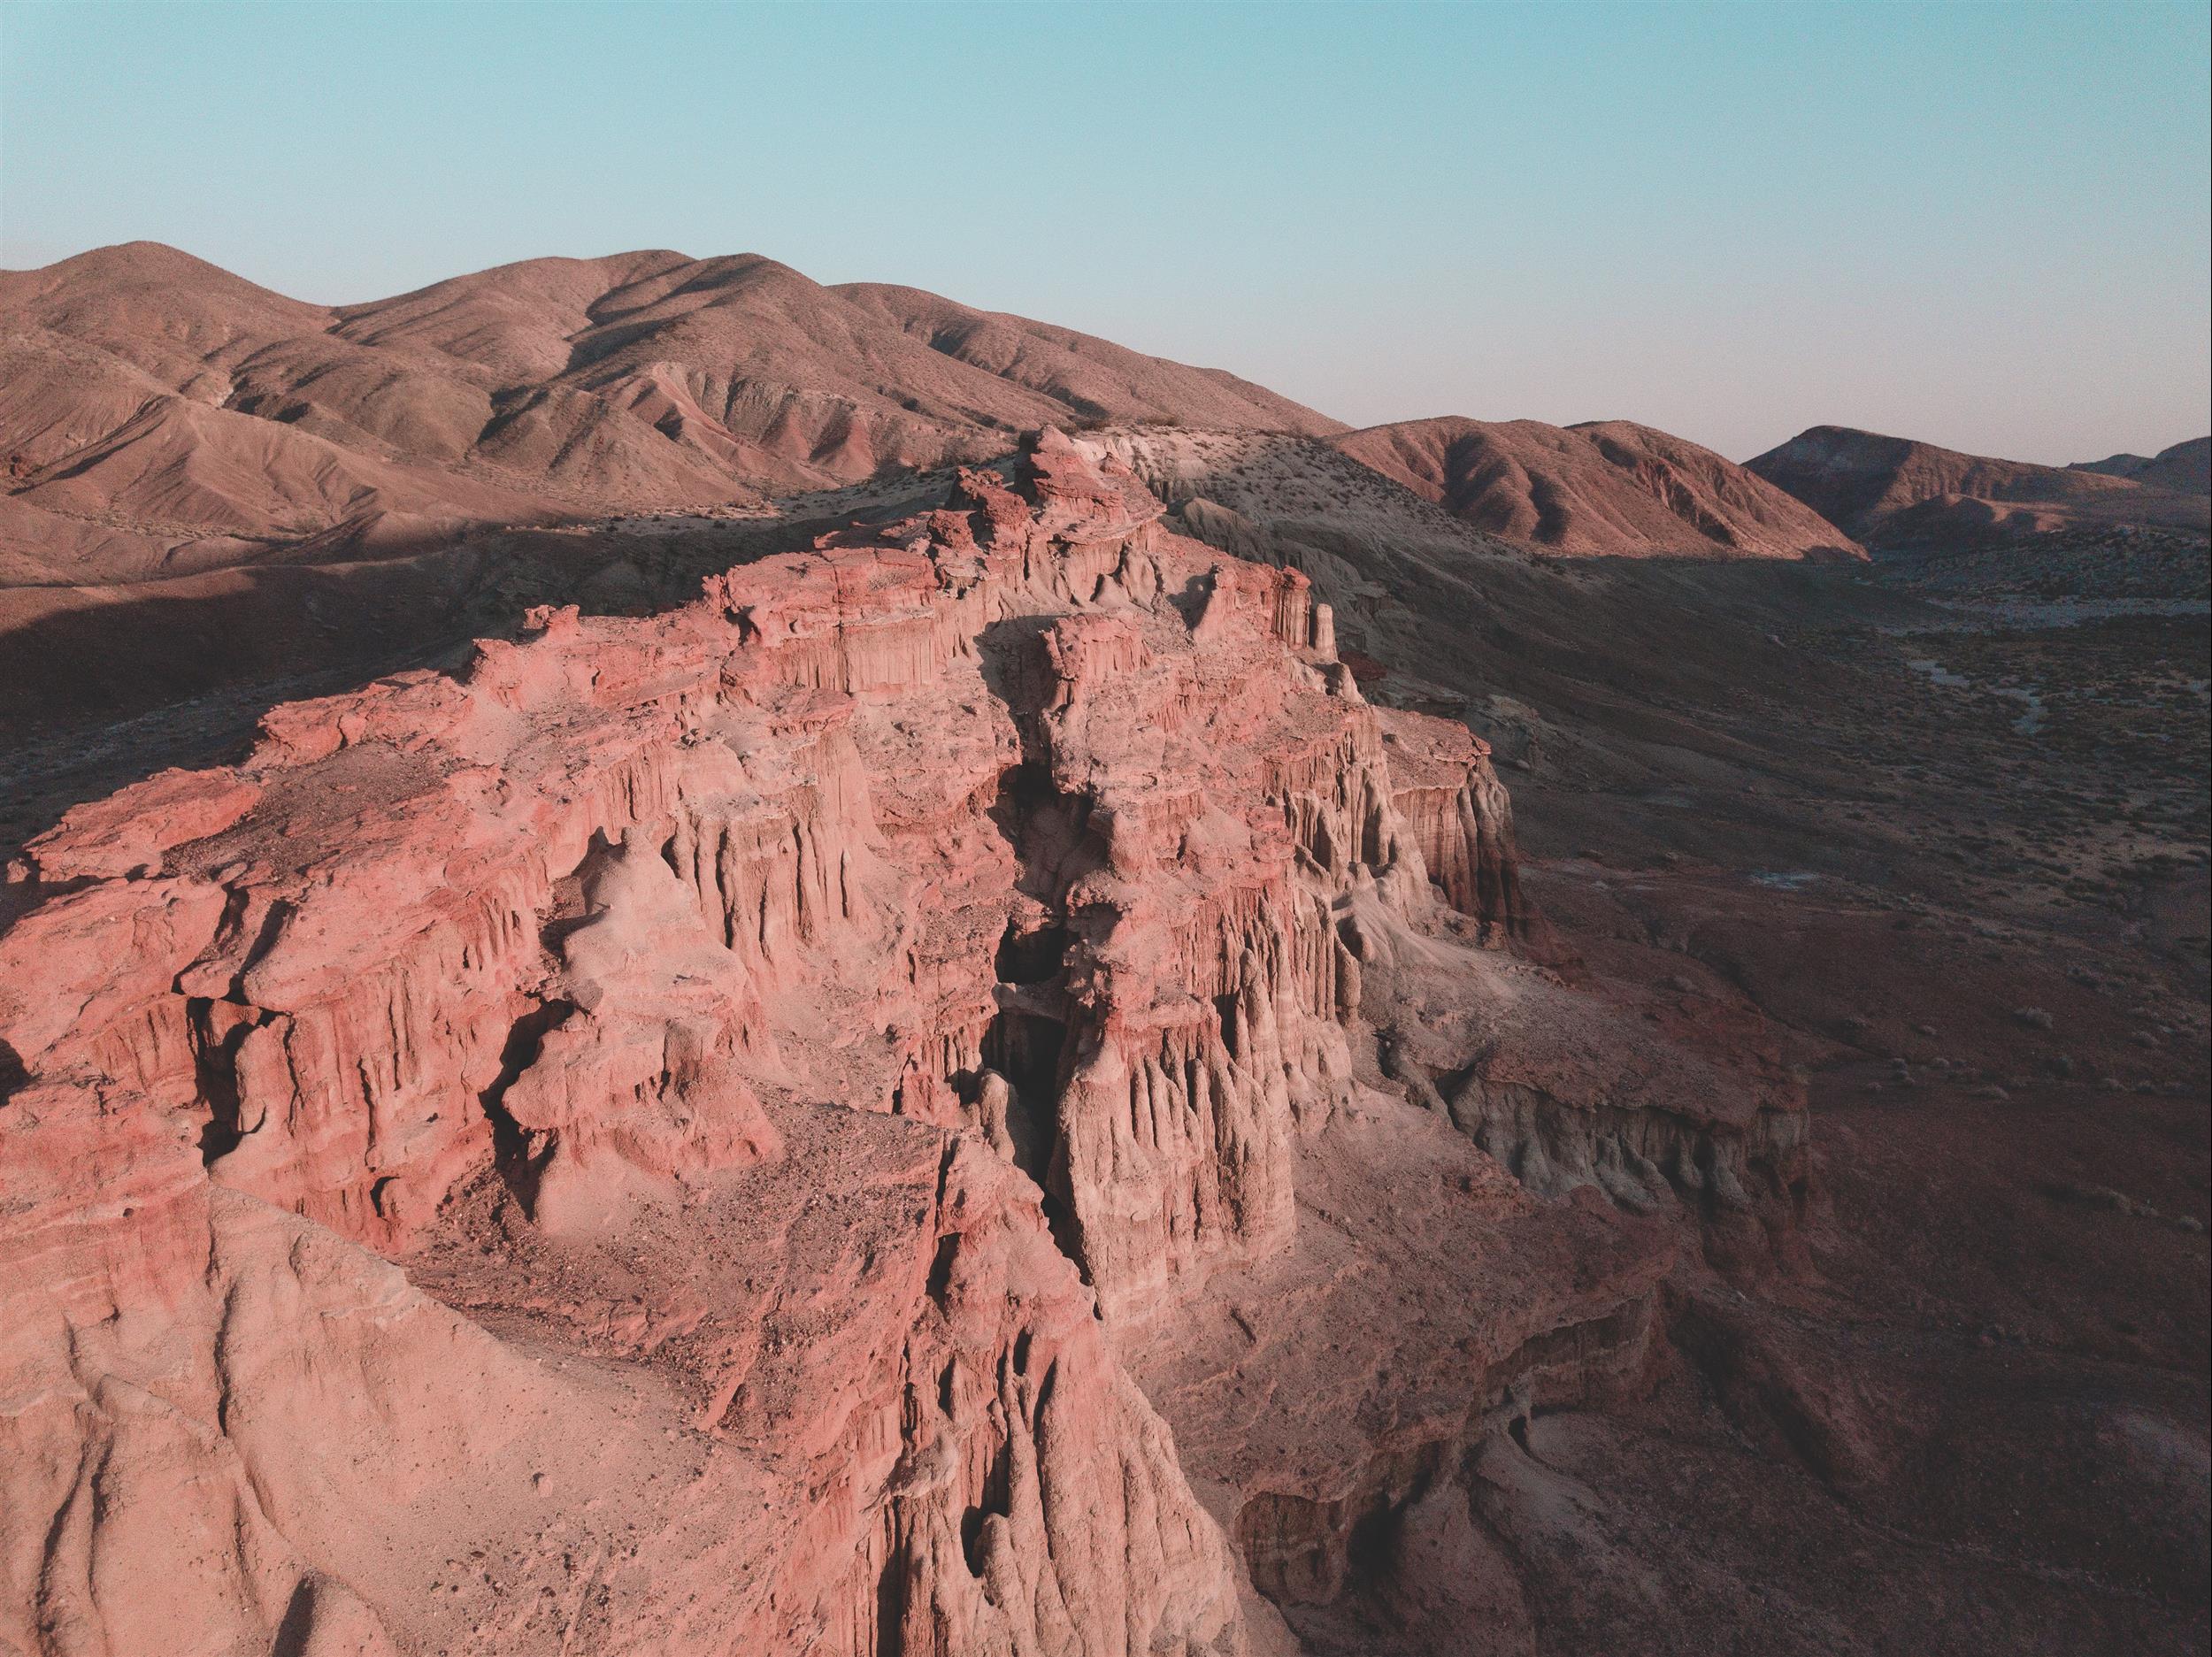 A areil view of a desert mountains..